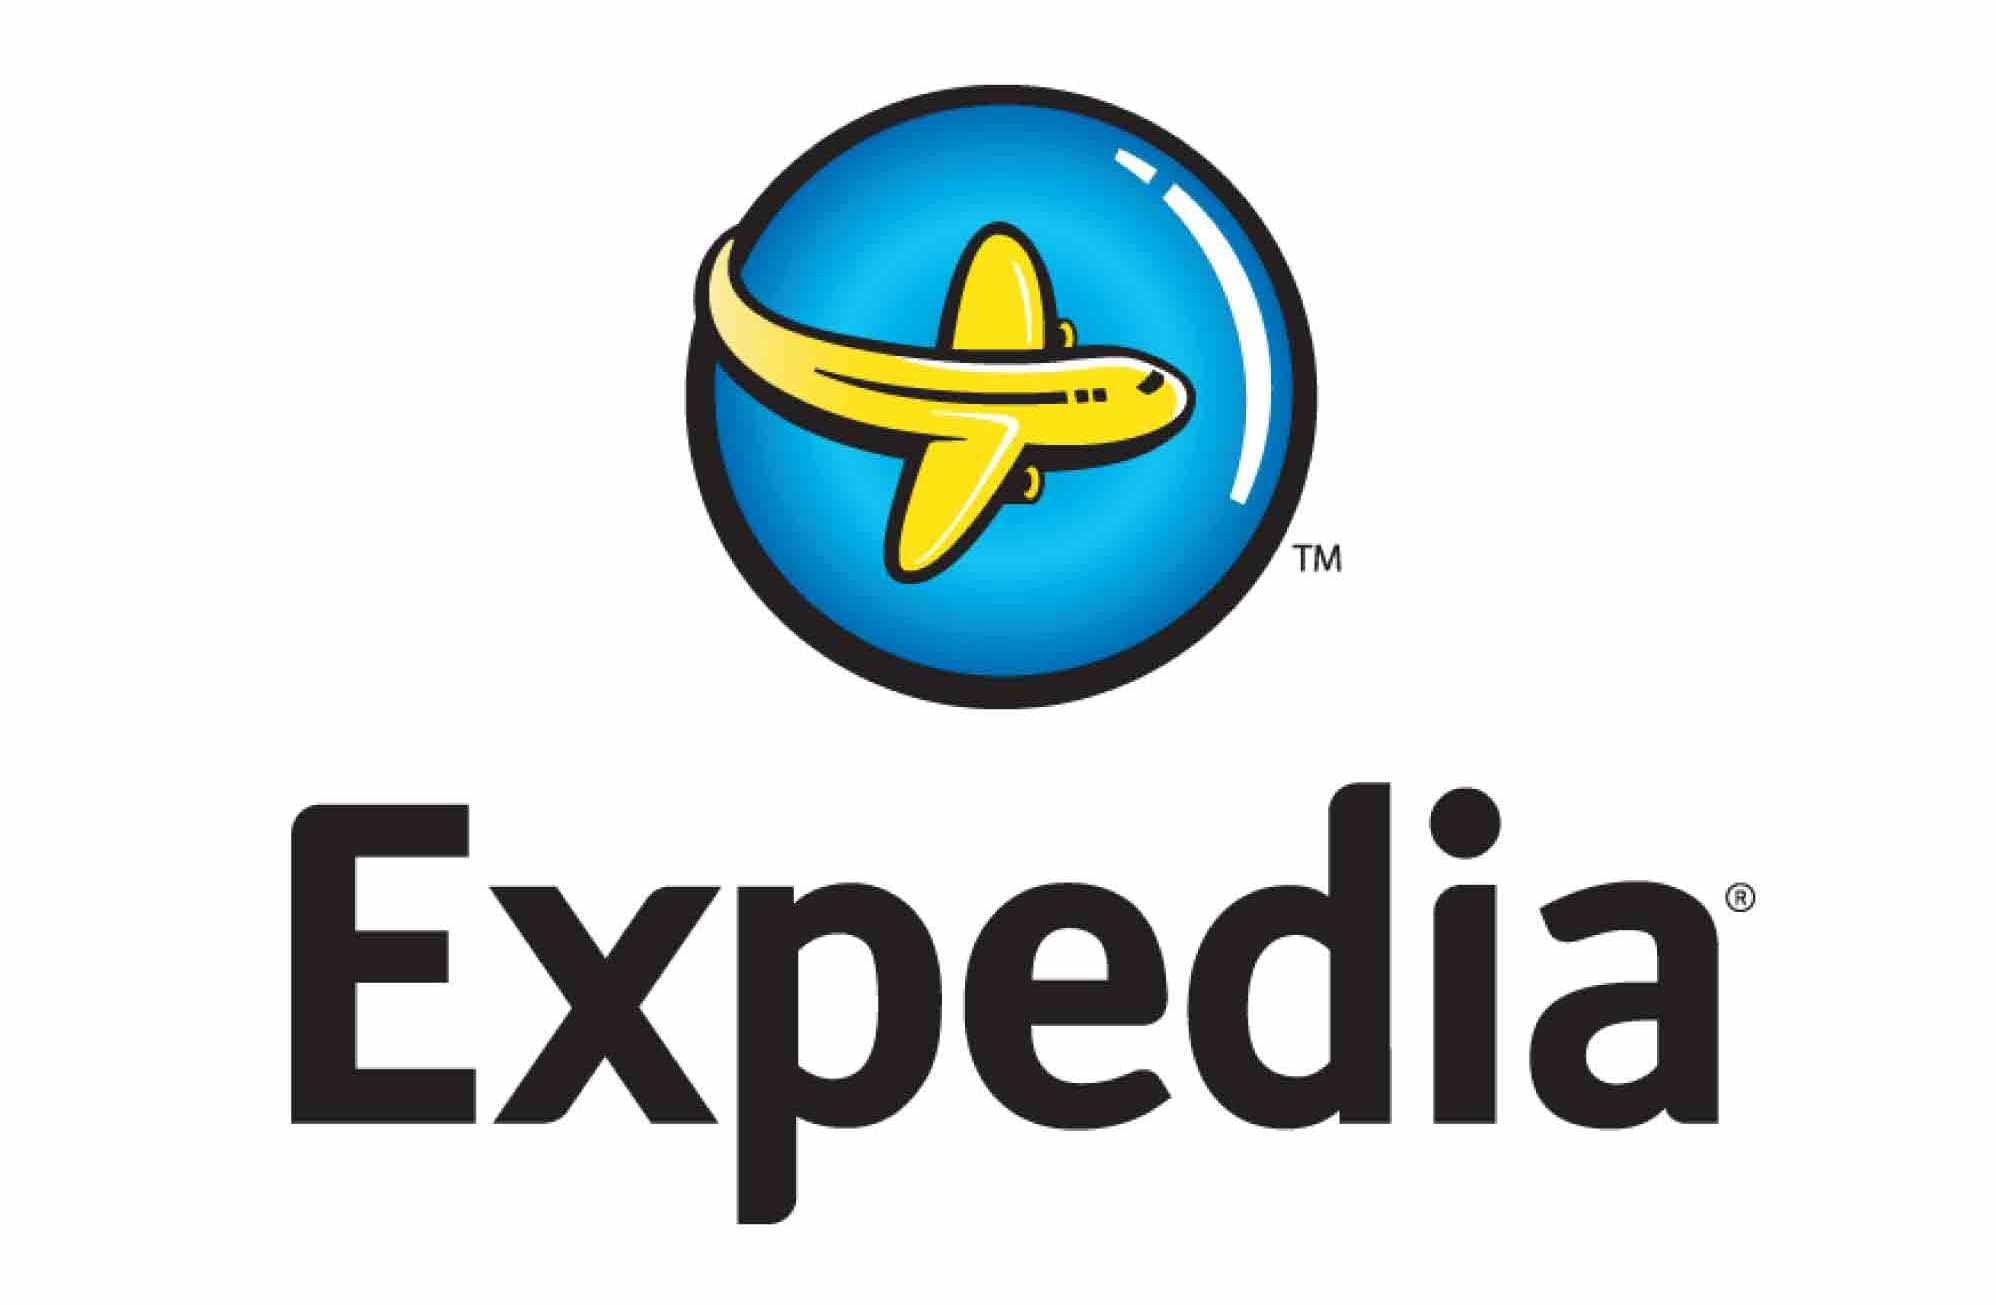 td travel expedia